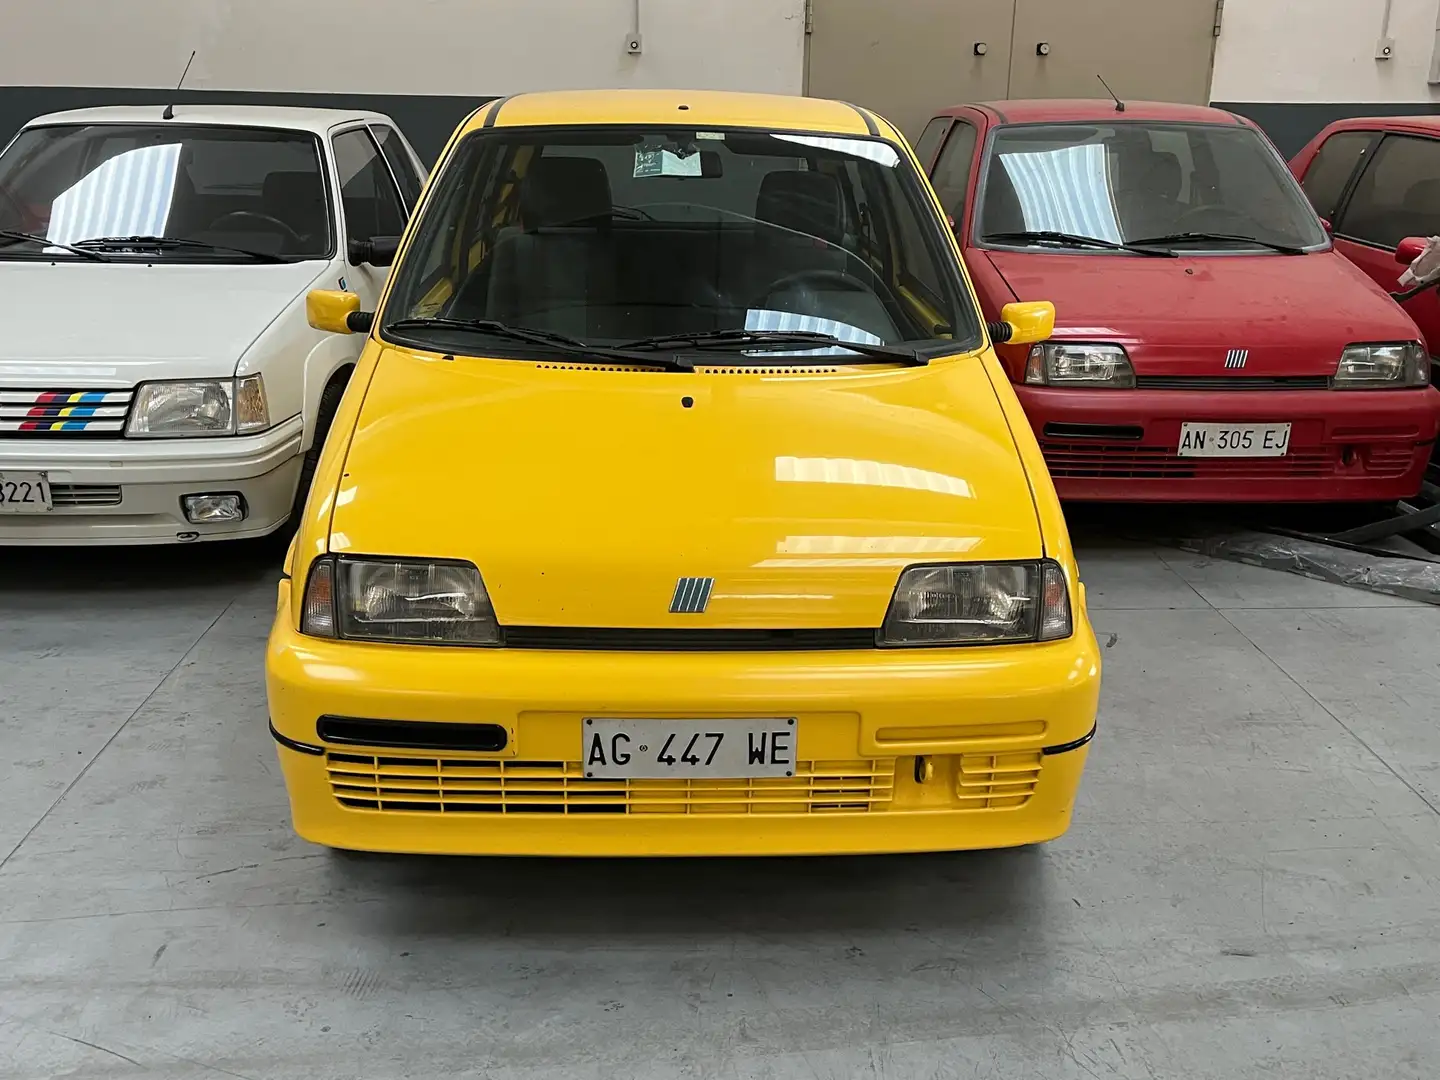 Fiat Cinquecento 1.1 Sporting Giallo Ginestra Yellow - 2